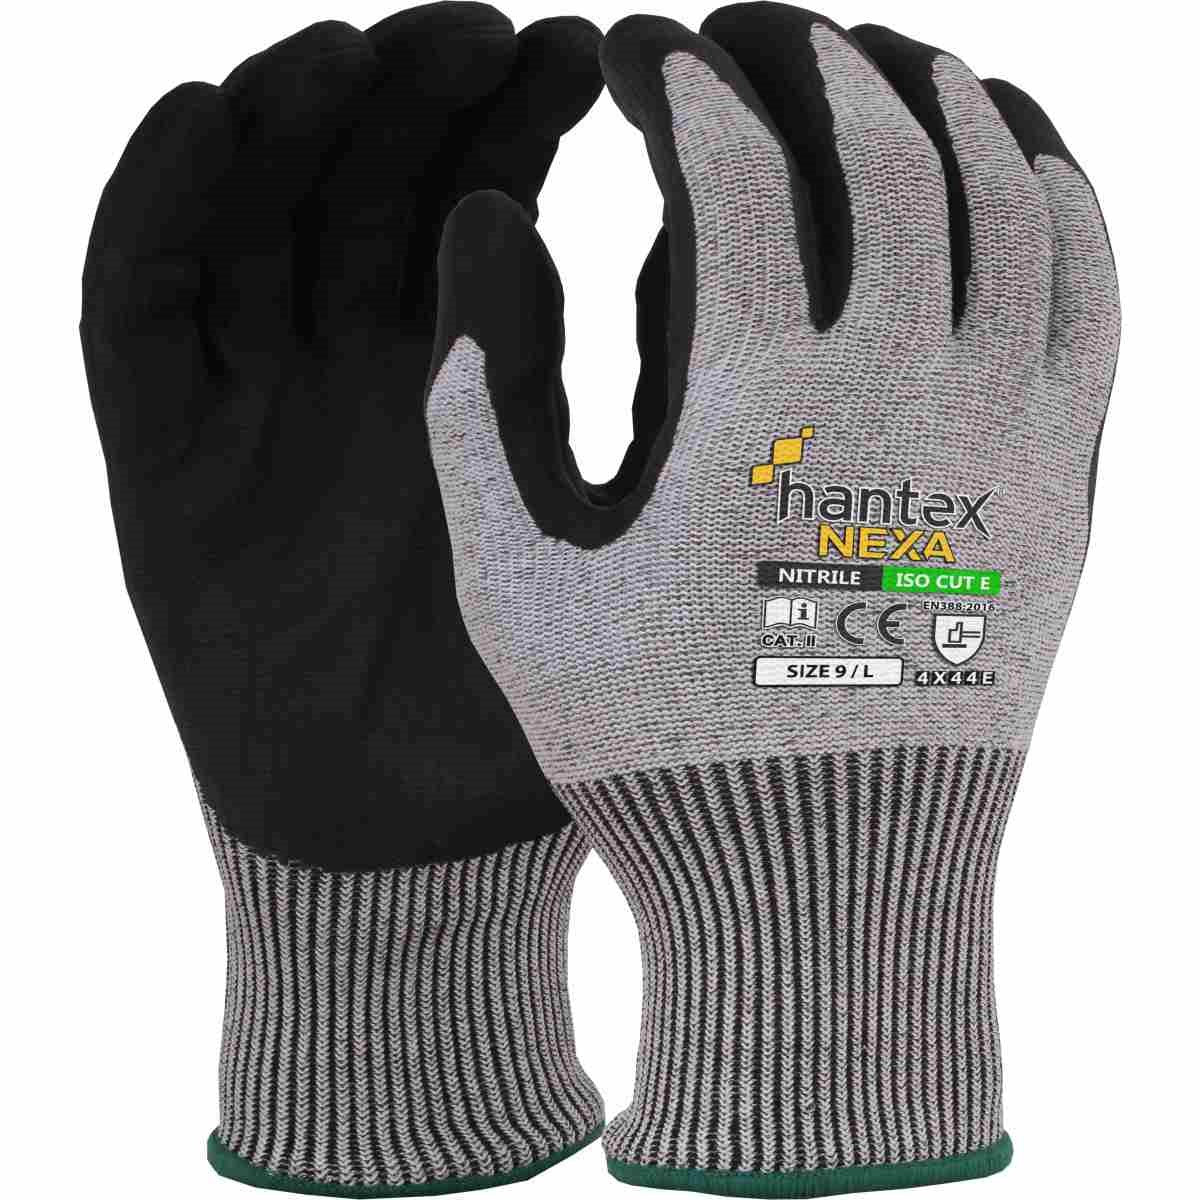 Ultimate Industrial Hantex Nexa - ISO Cut Resistant Gloves, Grey/Black